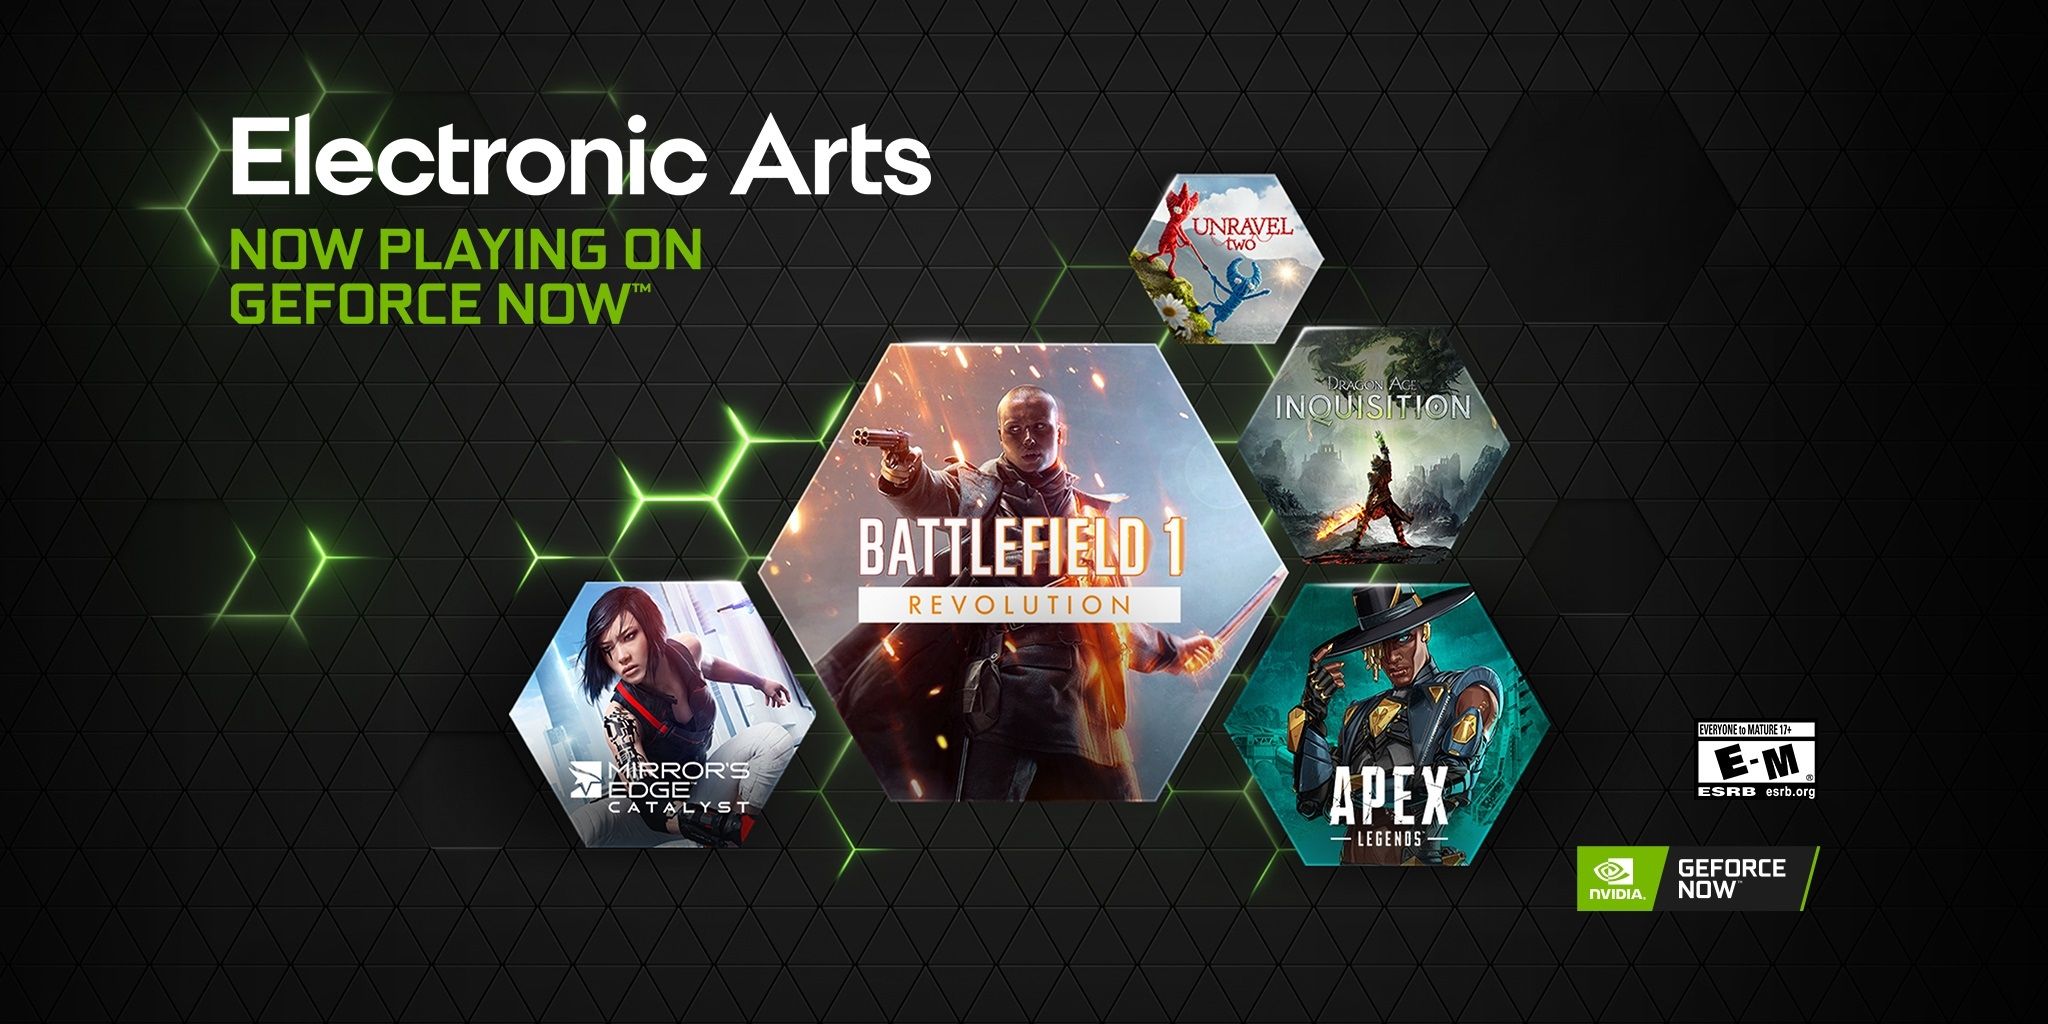 GeForce Now Electronic Arts